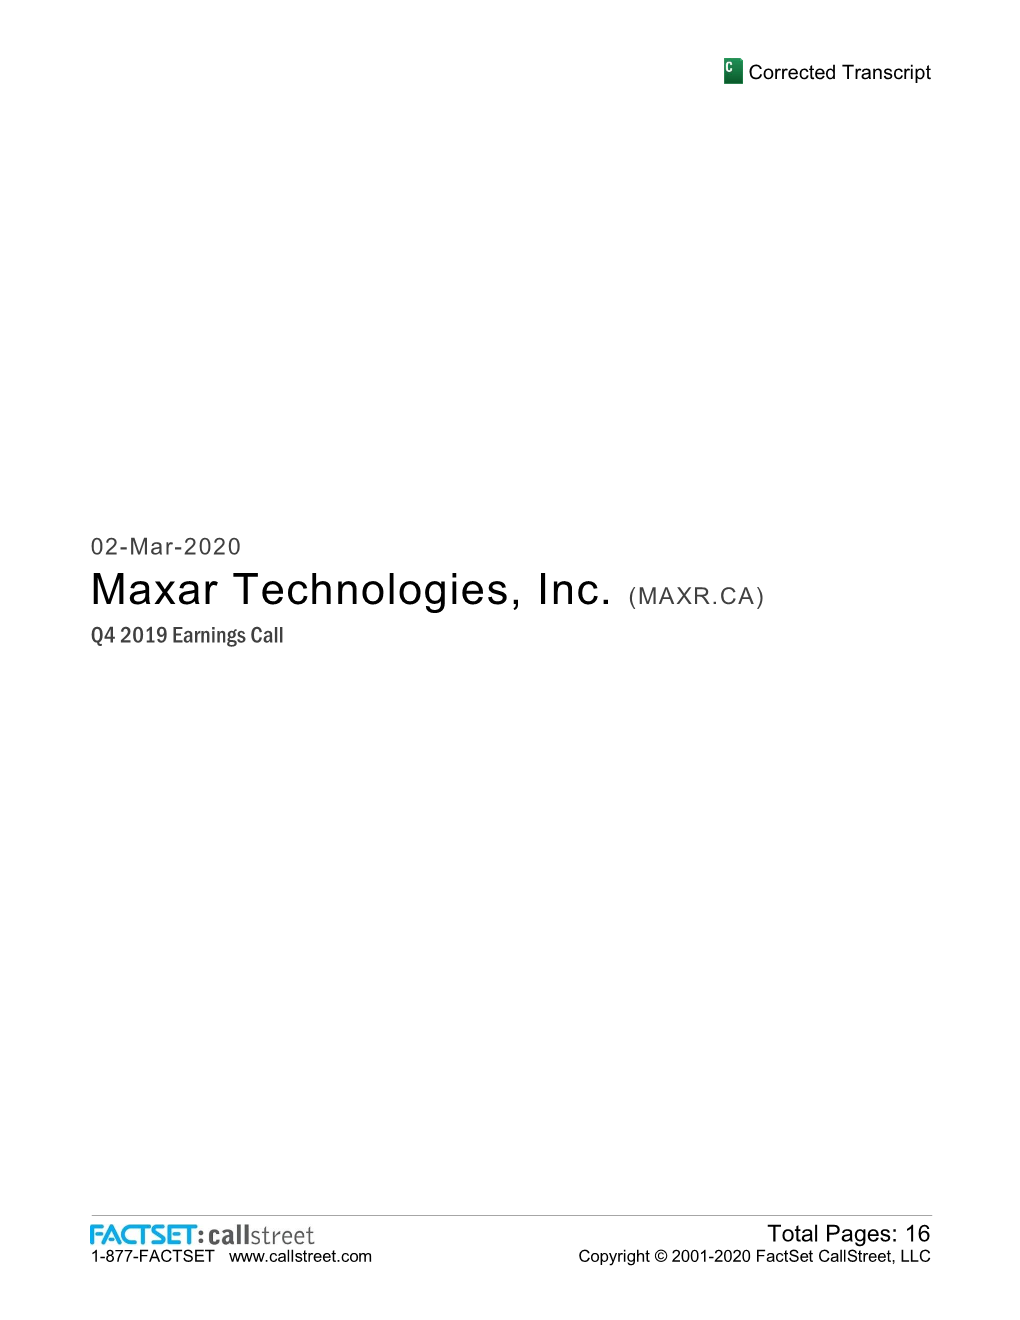 Maxar Technologies, Inc. (MAXR.CA) Q4 2019 Earnings Call